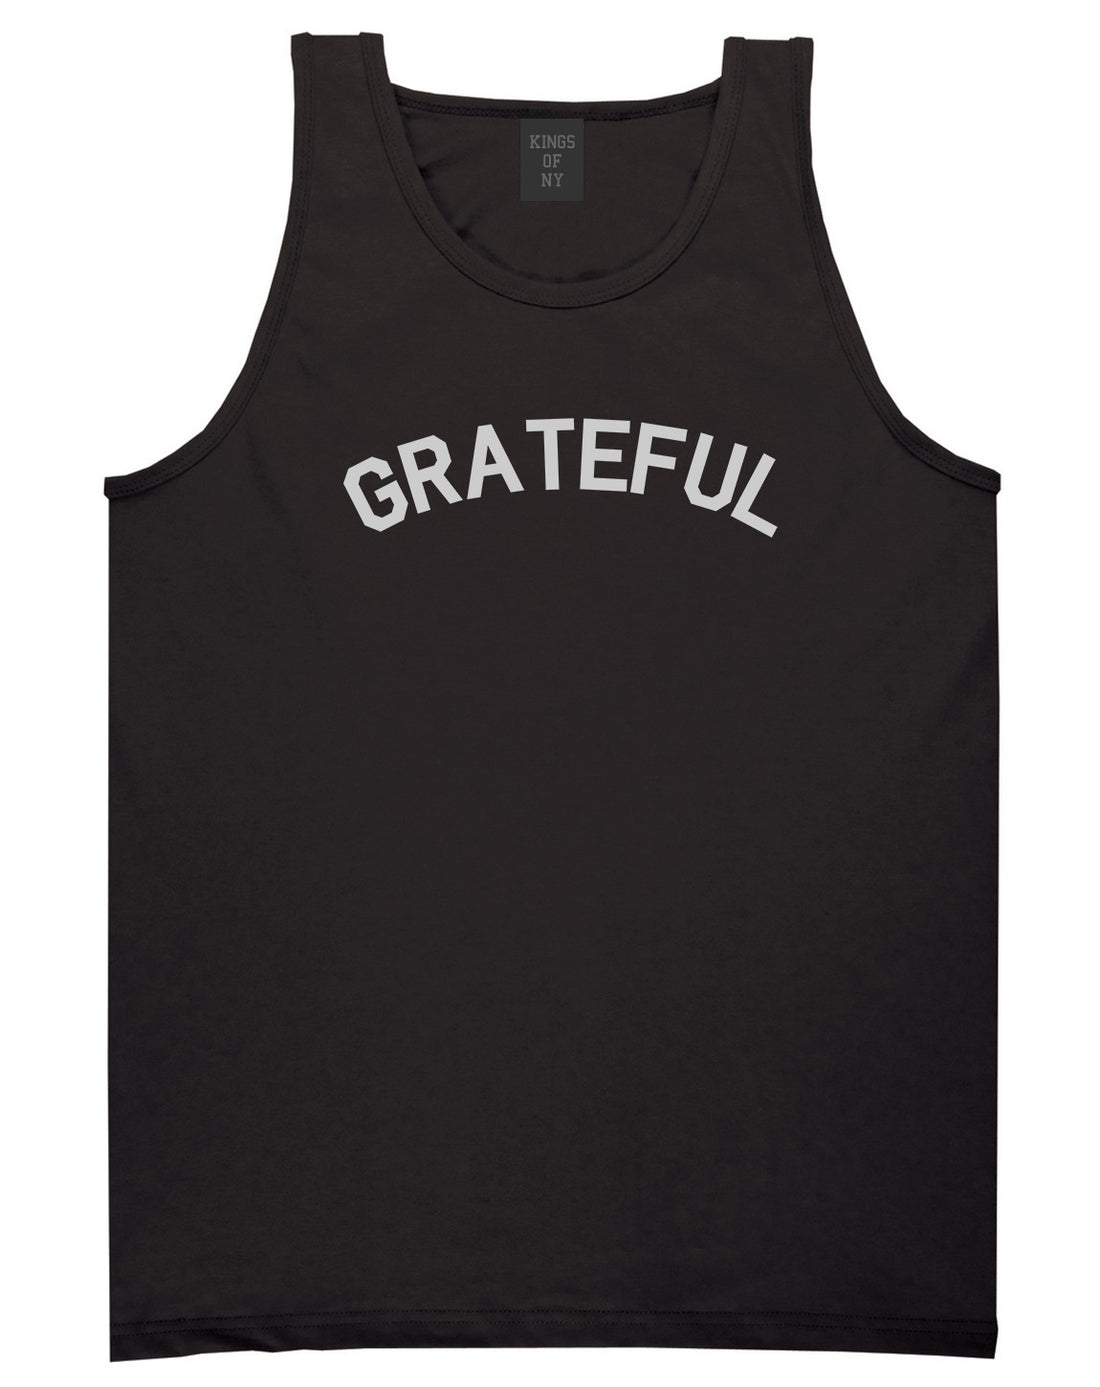 Grateful Thankful Mens Tank Top Shirt Black